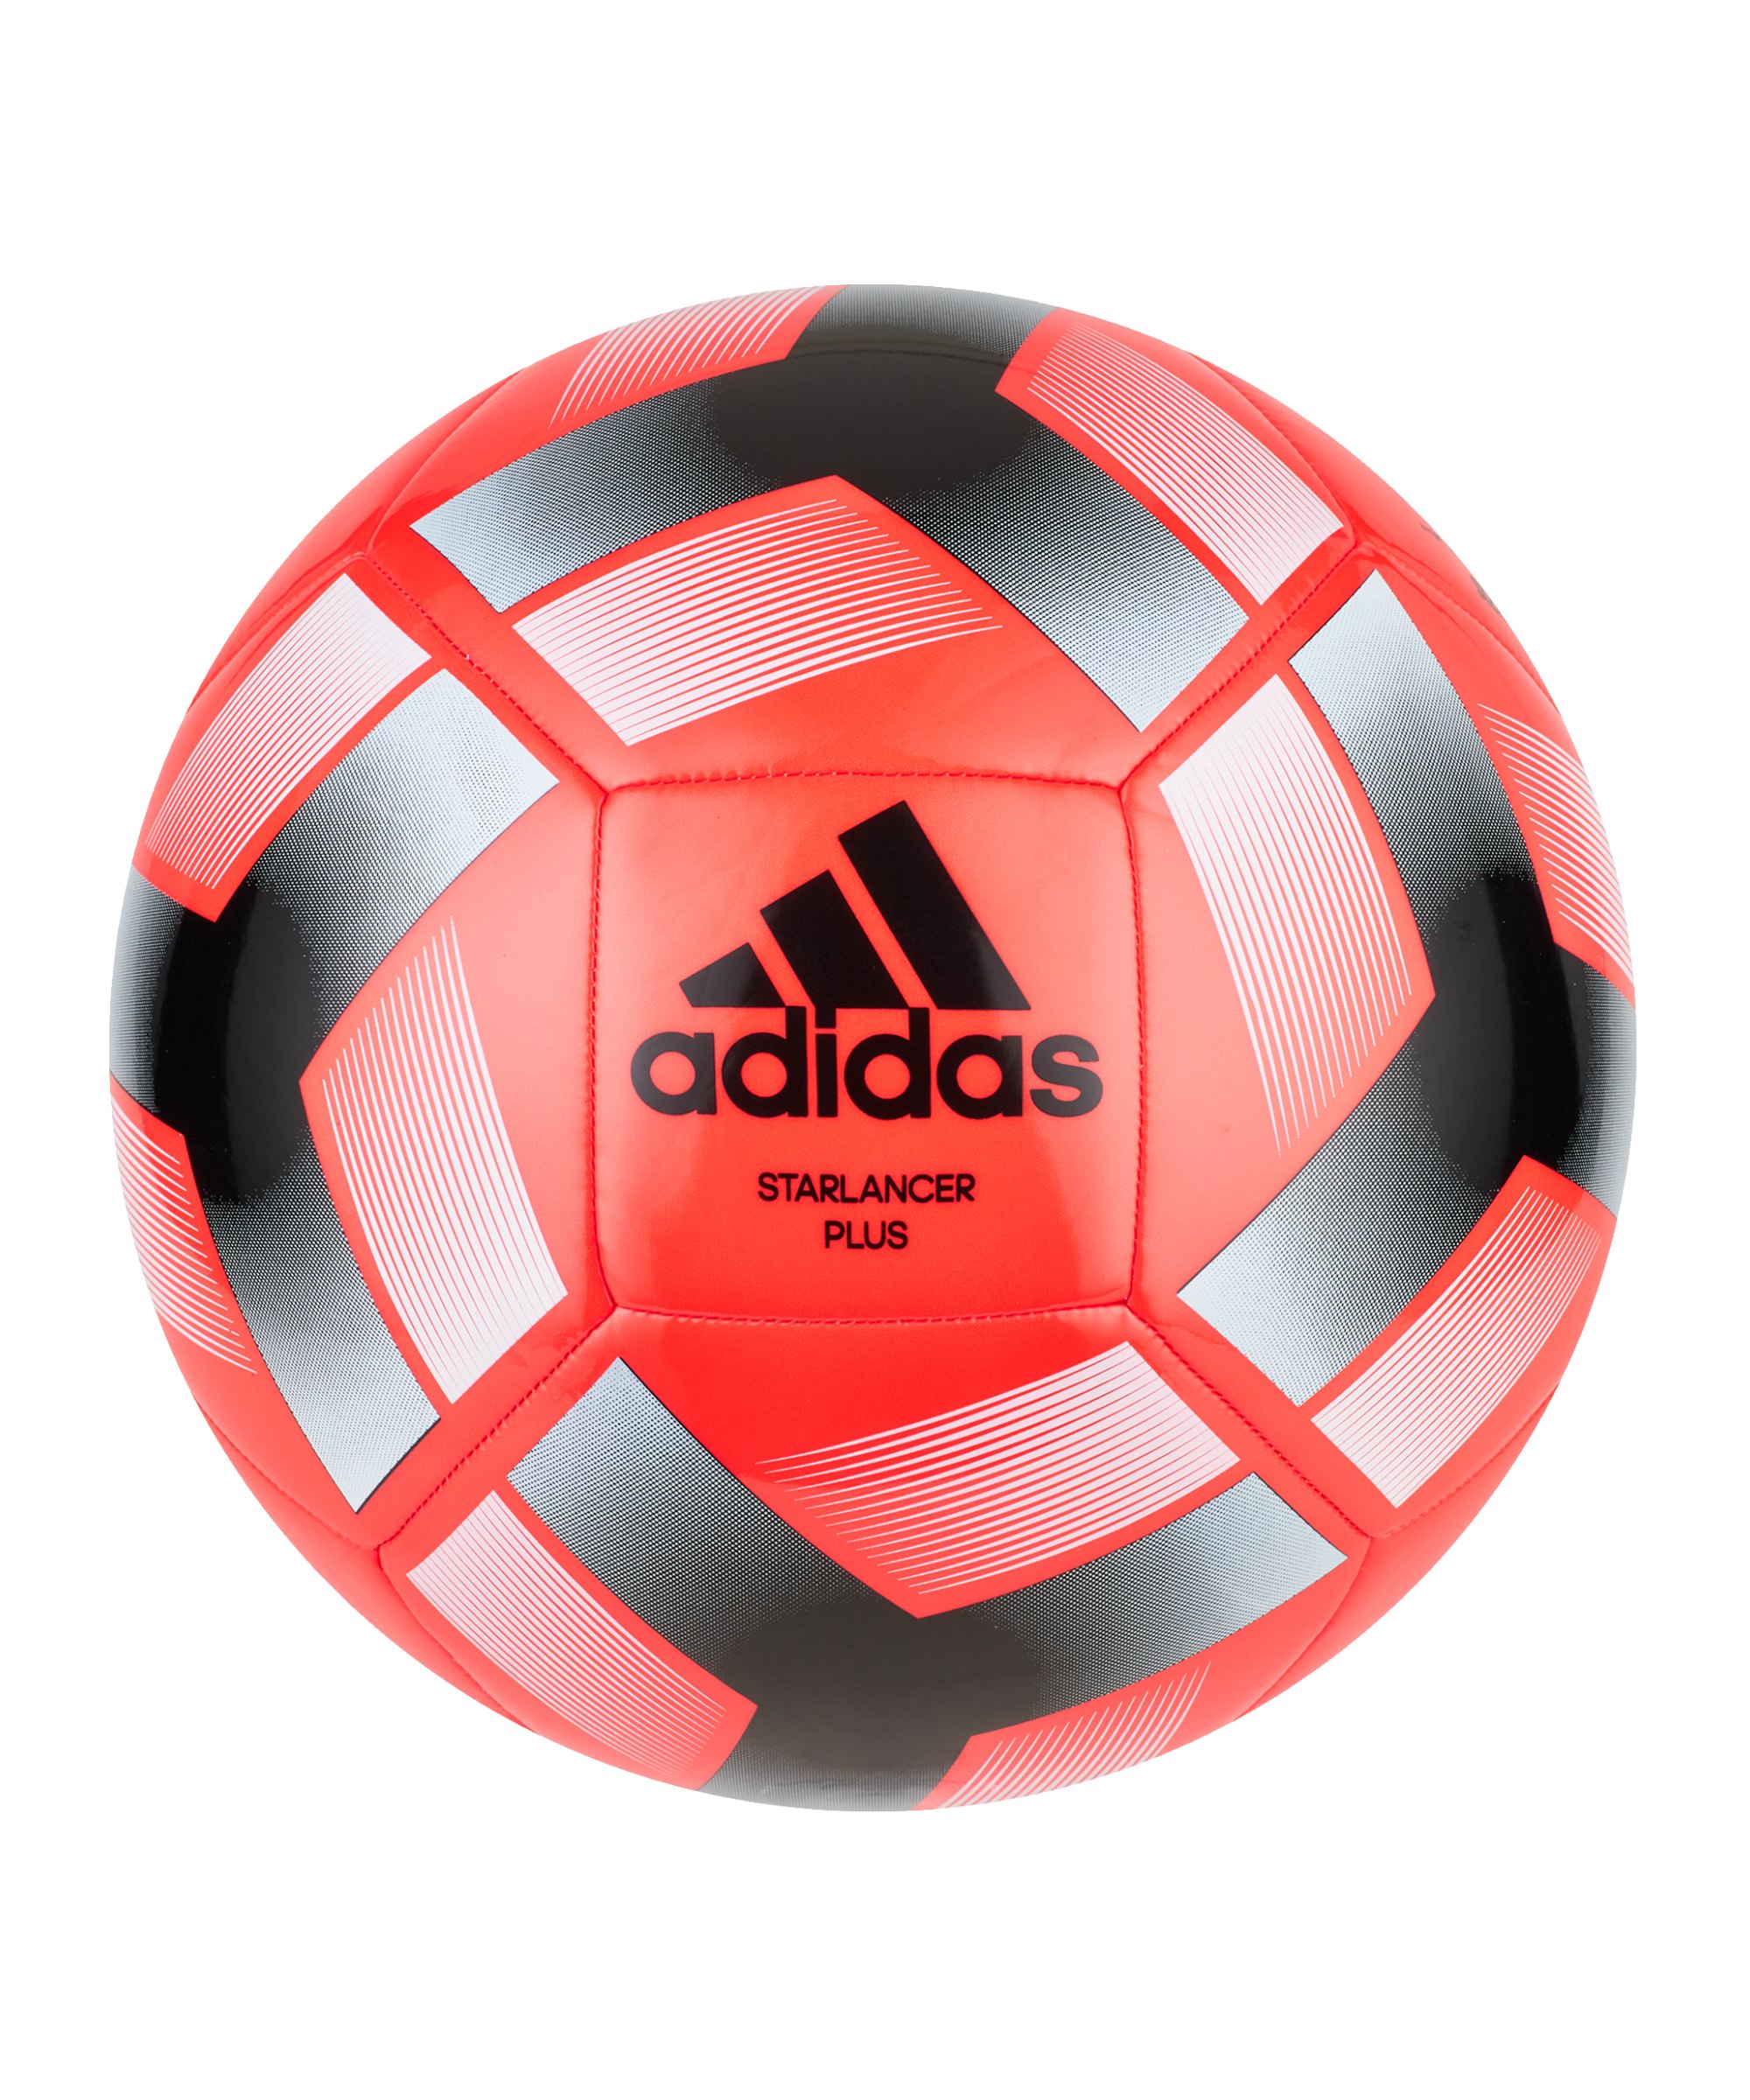 adidas Starlancer Plus Trainingsball Rot Weiss - rot